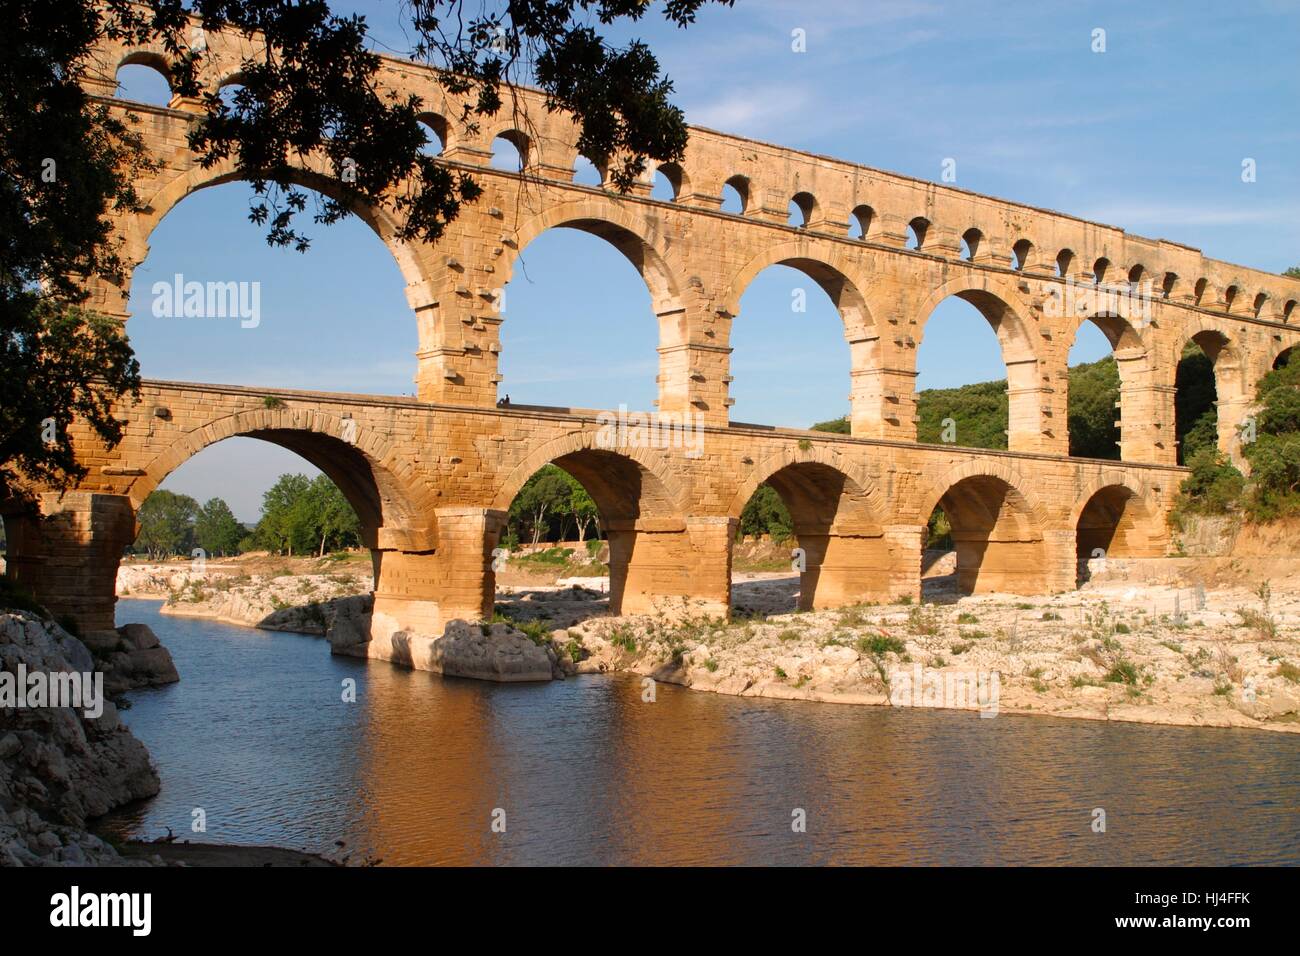 Roman aqueduct Pont du Gard, Remoulins, Provence, South of France, France Stock Photo